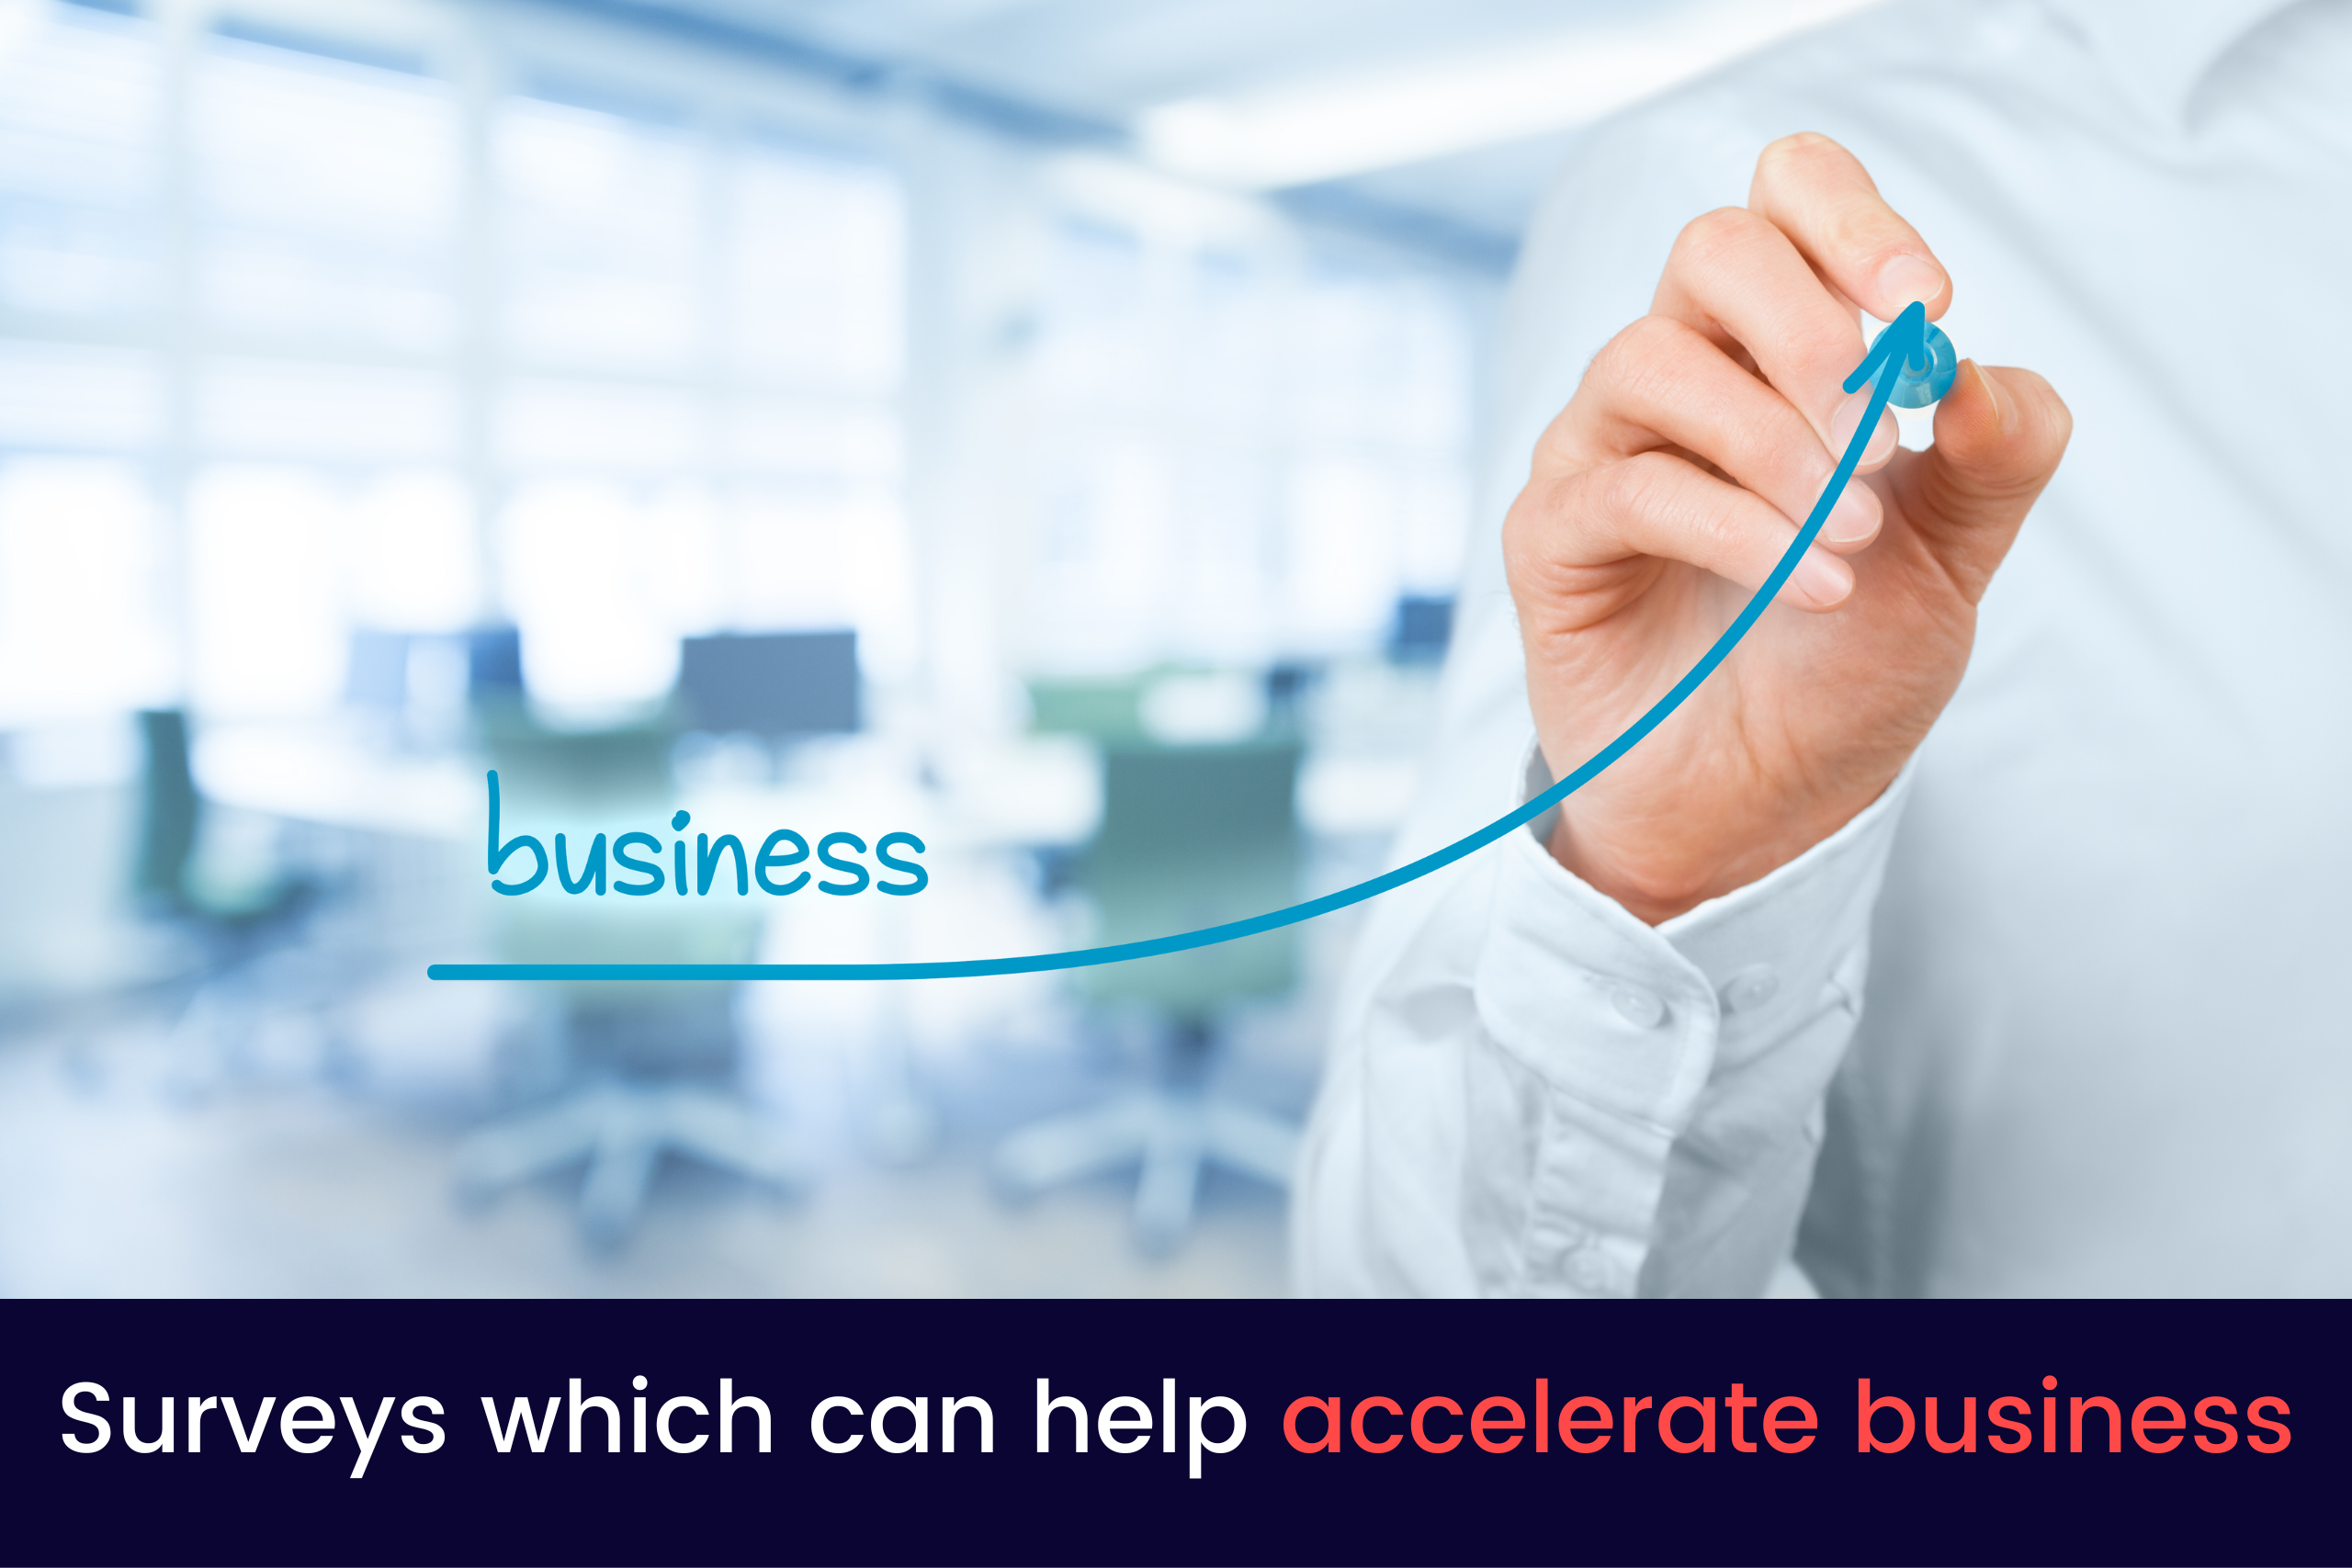 accelerate business